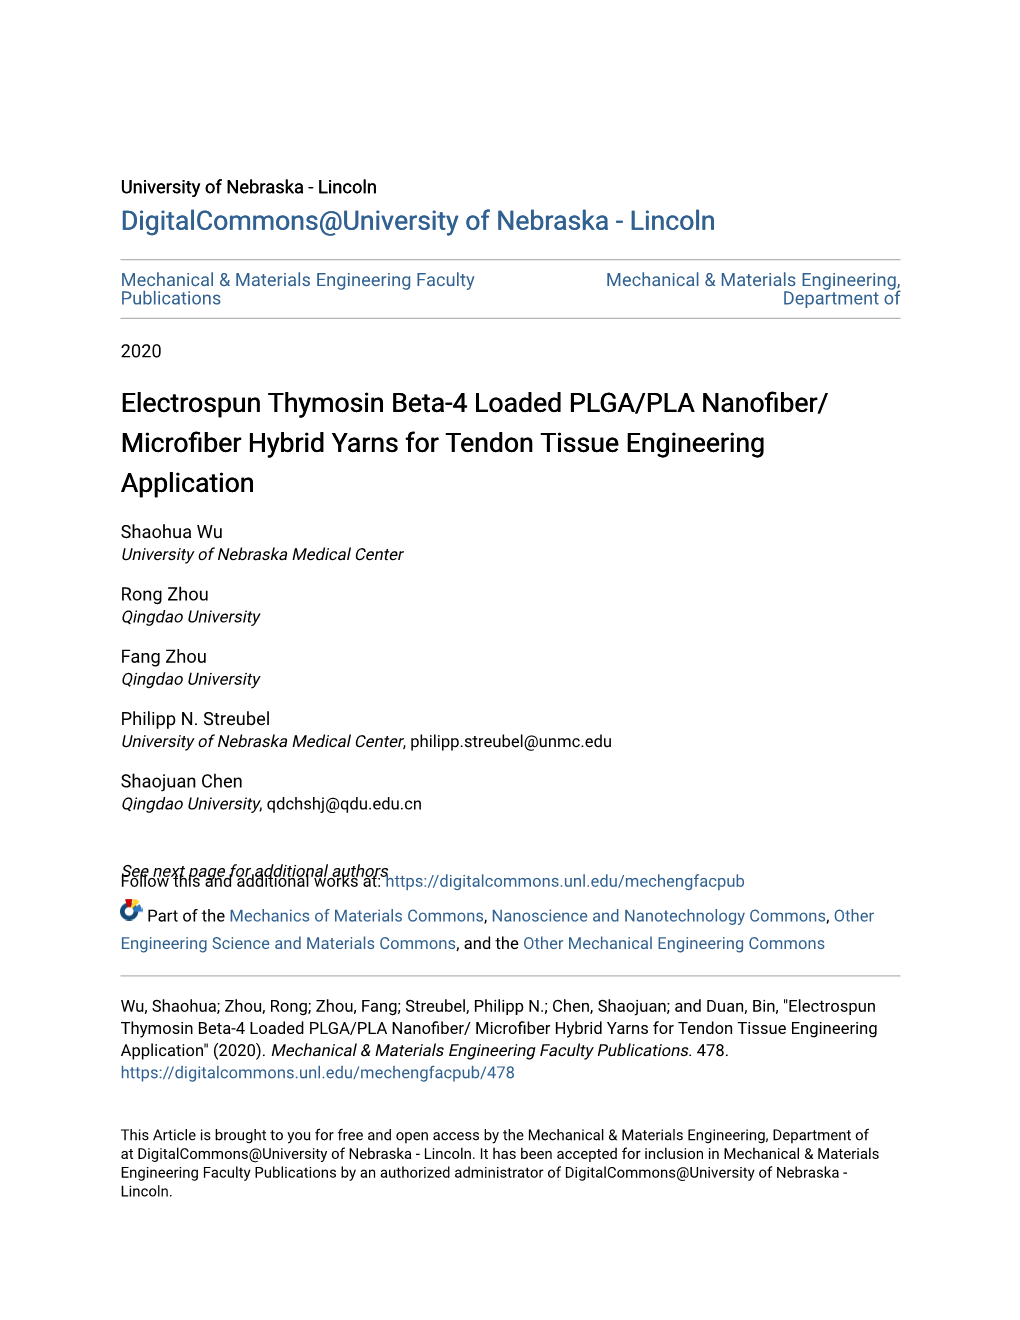 Electrospun Thymosin Beta-4 Loaded PLGA/PLA Nanofiber/ Microfiber Hybrid Arnsy for Tendon Tissue Engineering Application